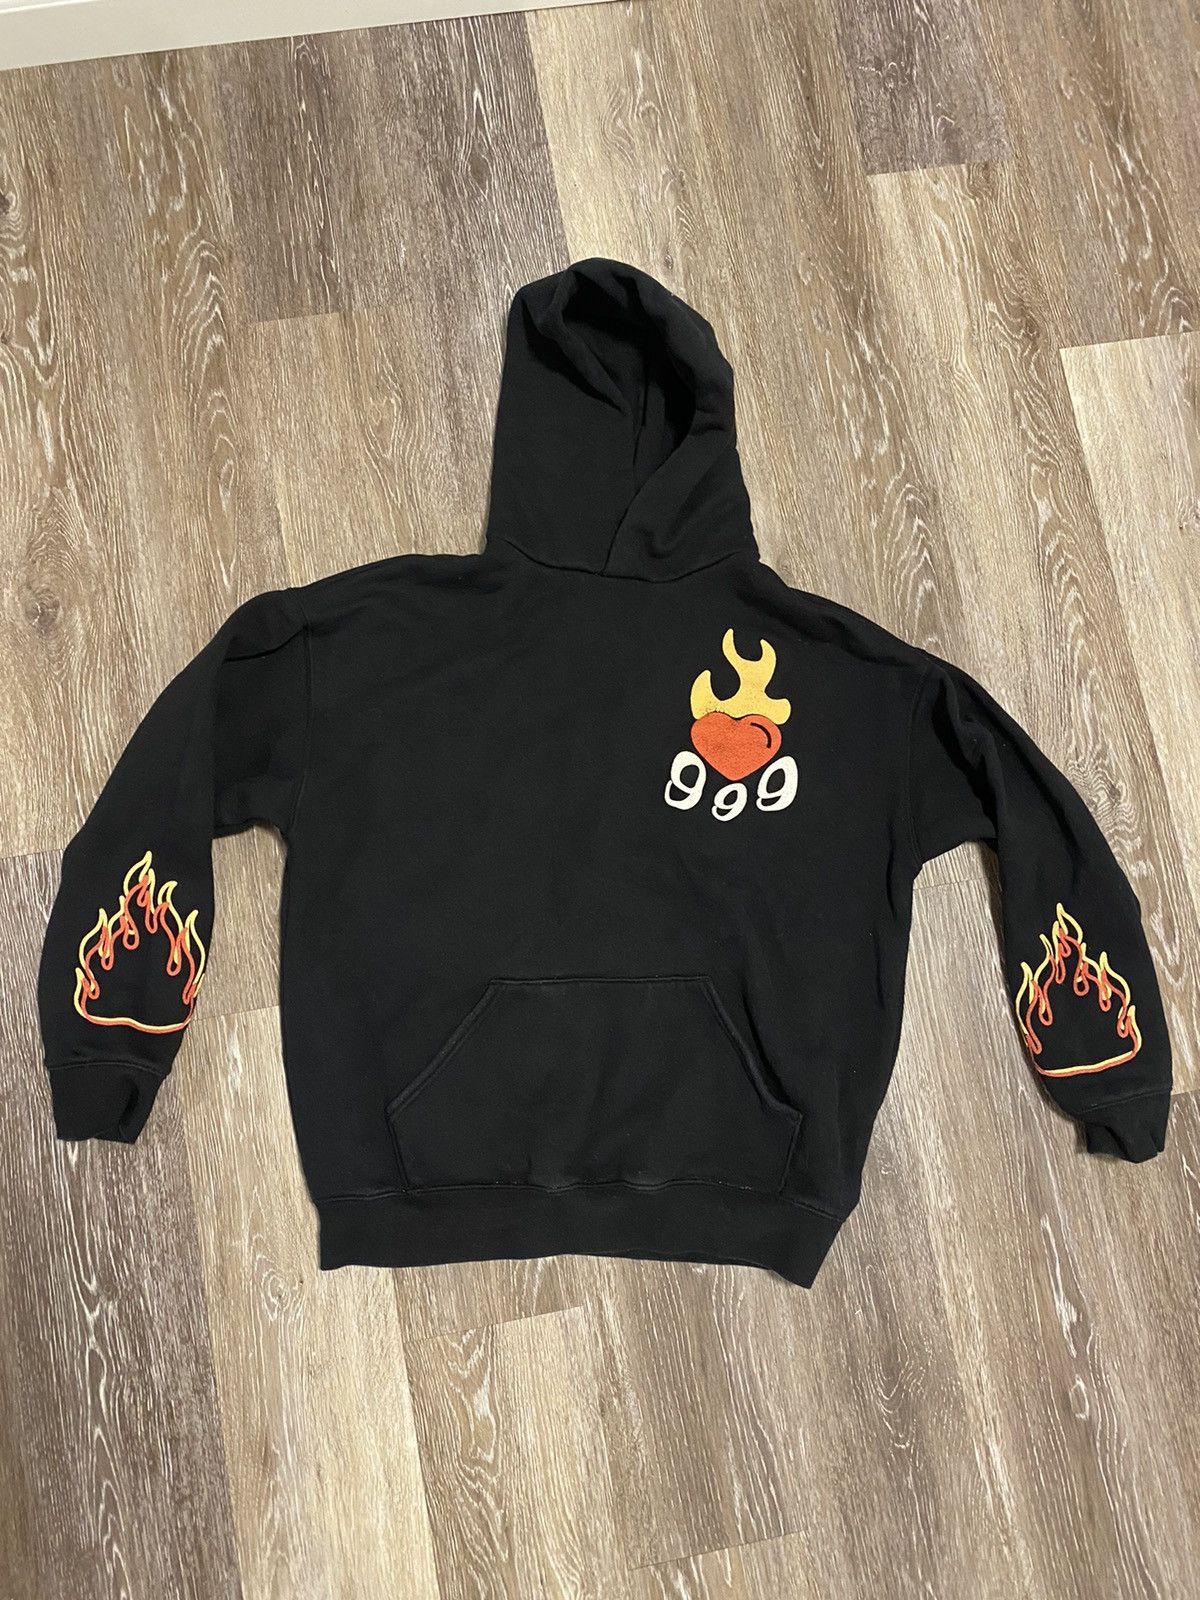 999 Club Juice wrld burning hearts hoodie | Grailed